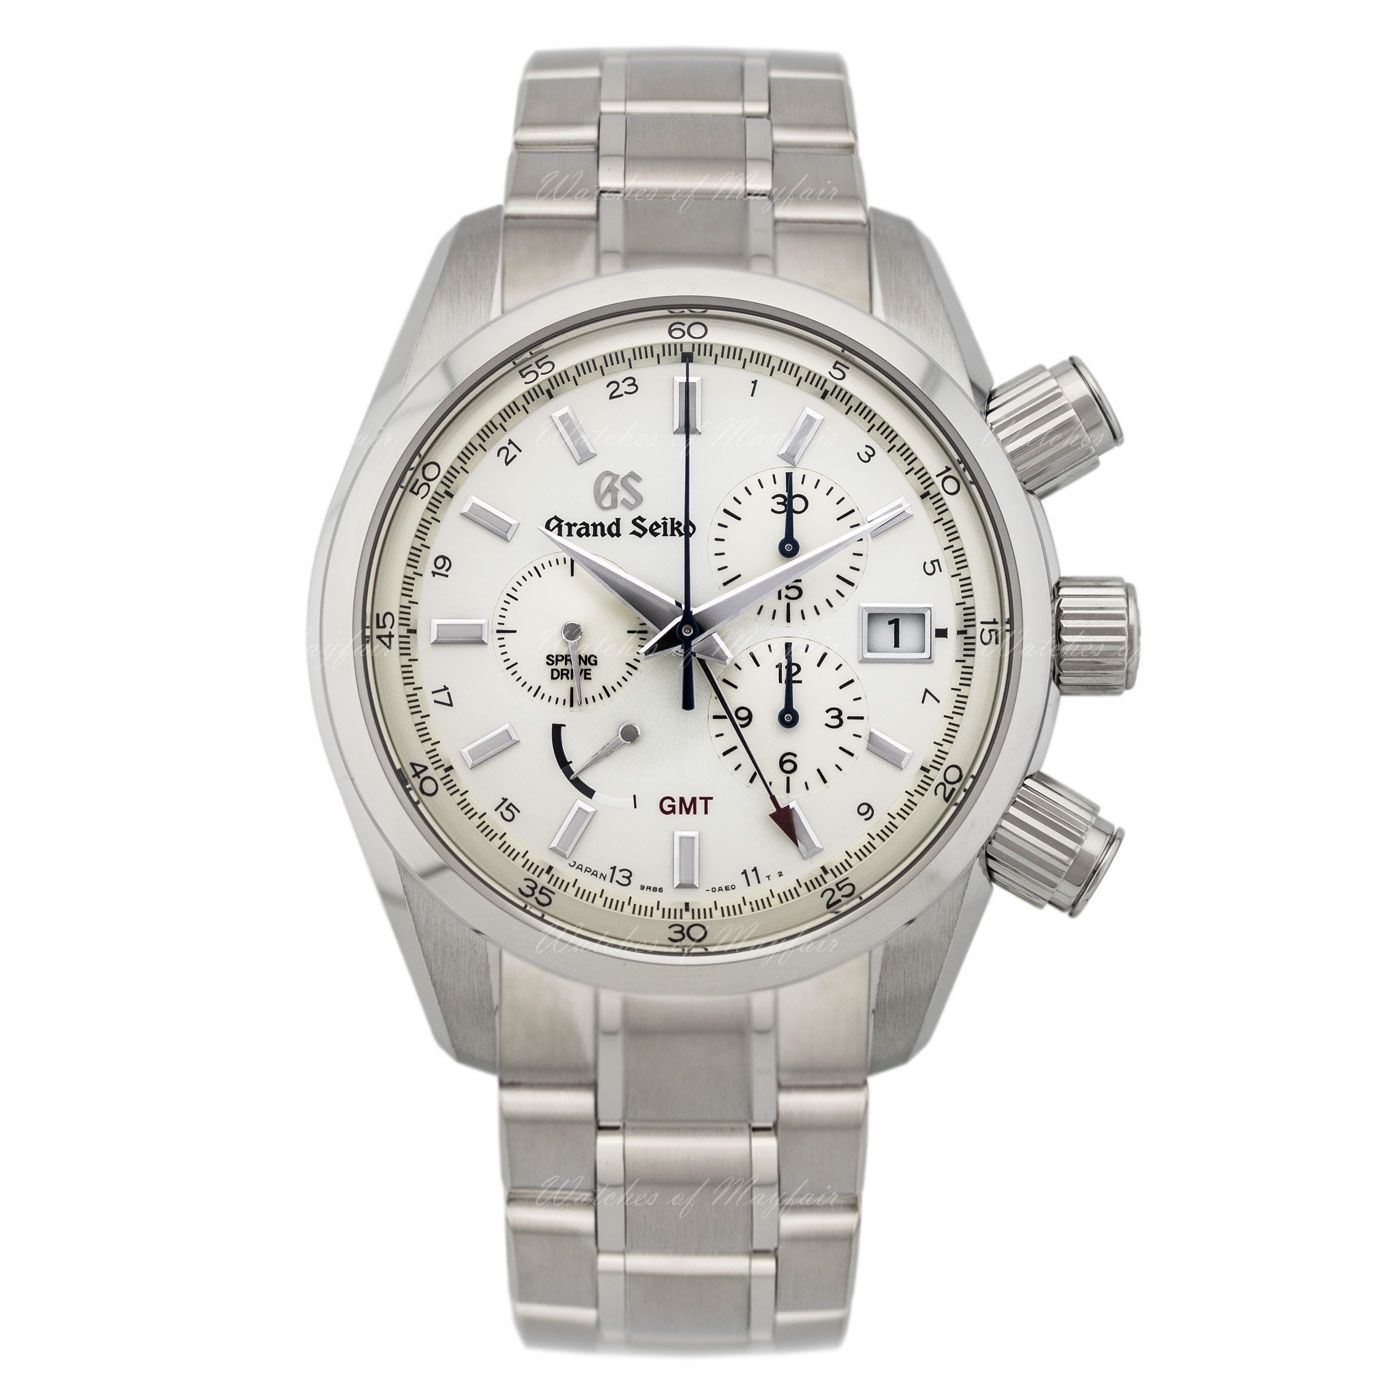 SBGC201 | Grand Seiko Sport Spring Drive Chronograph  mm watch. Buy Now